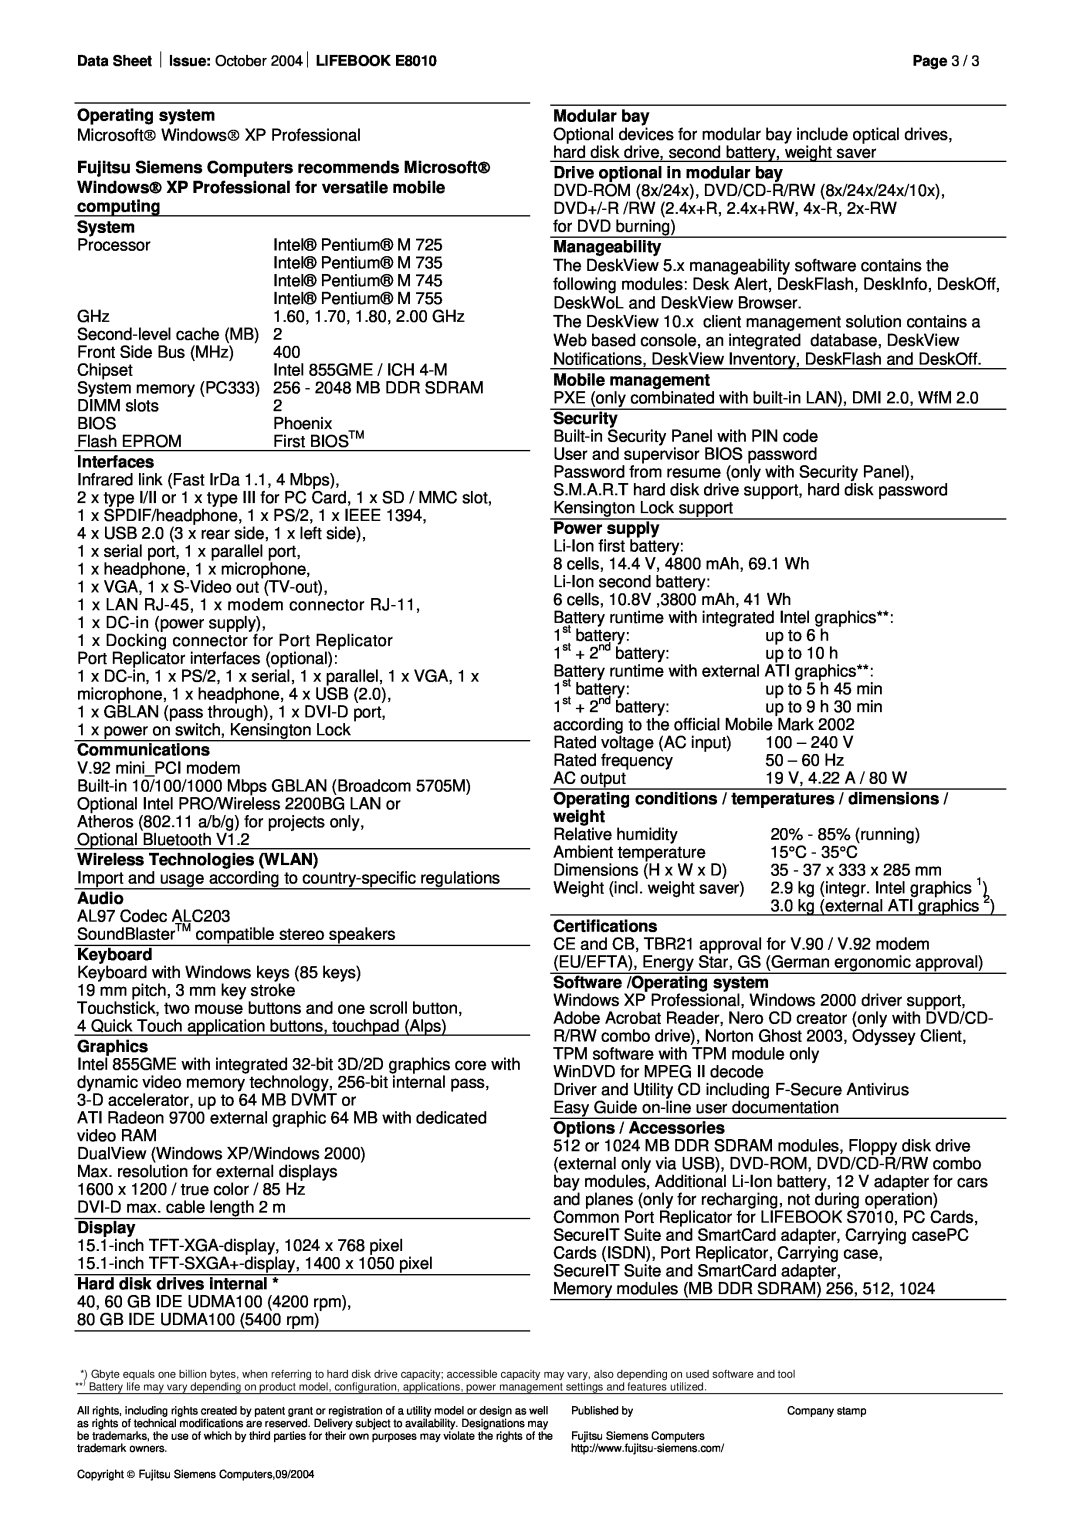 Fujitsu Siemens Computers warranty Data Sheet Issue October 2004 LIFEBOOK E8010, Page 